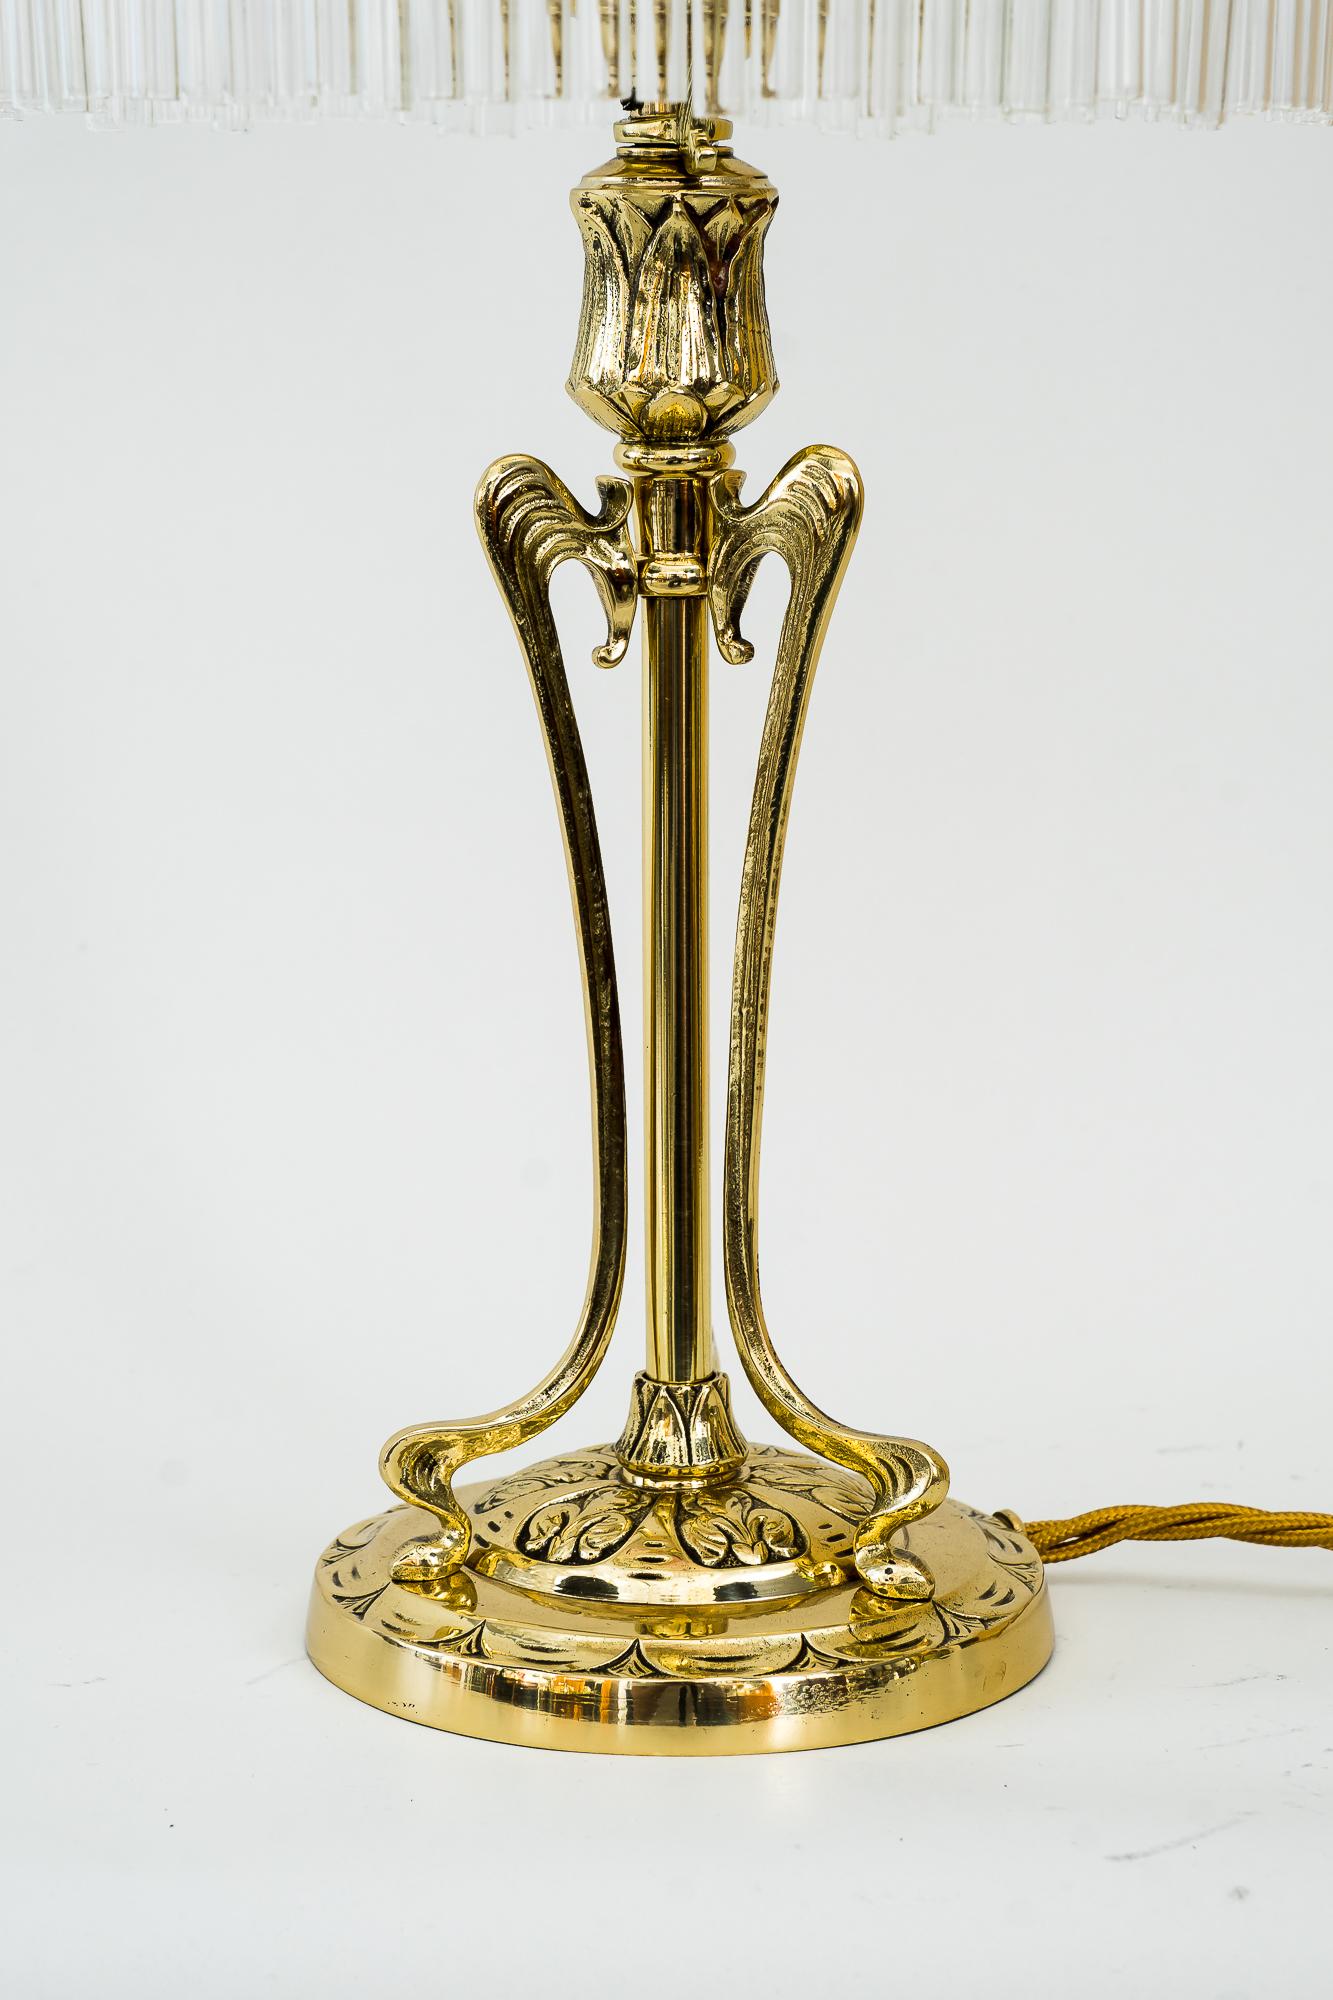 Austrian Jugendstil Table Lamp Around 1908 with Original Palme Koenig Glass Shade